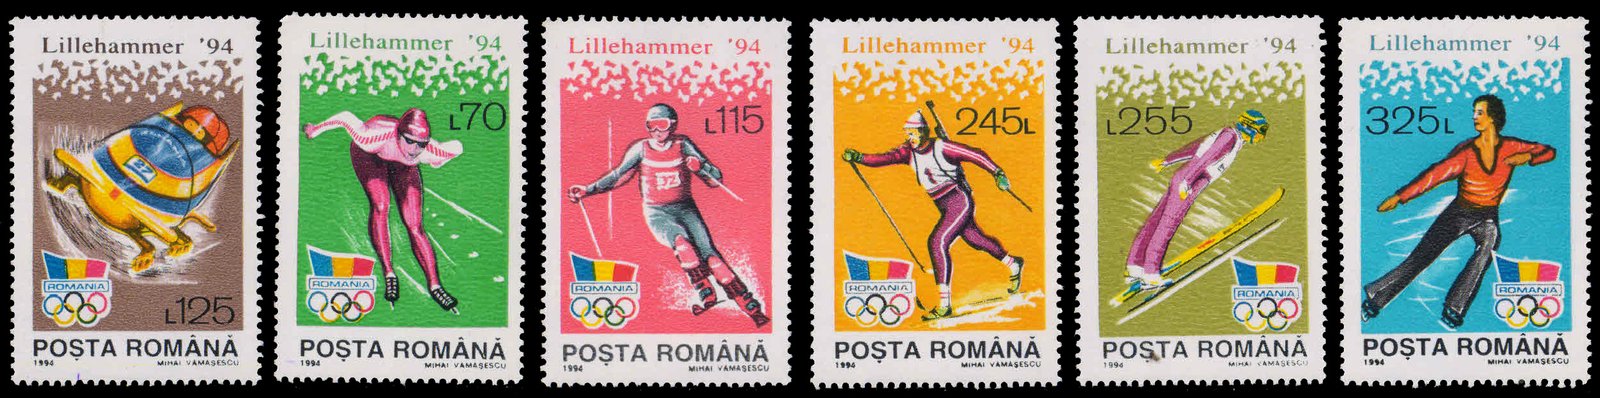 ROMANIA 1994-Winter Olympic Games, Skating, Skiing, Bob sleighing, Set of 6, MNH, S.G. 5588-93